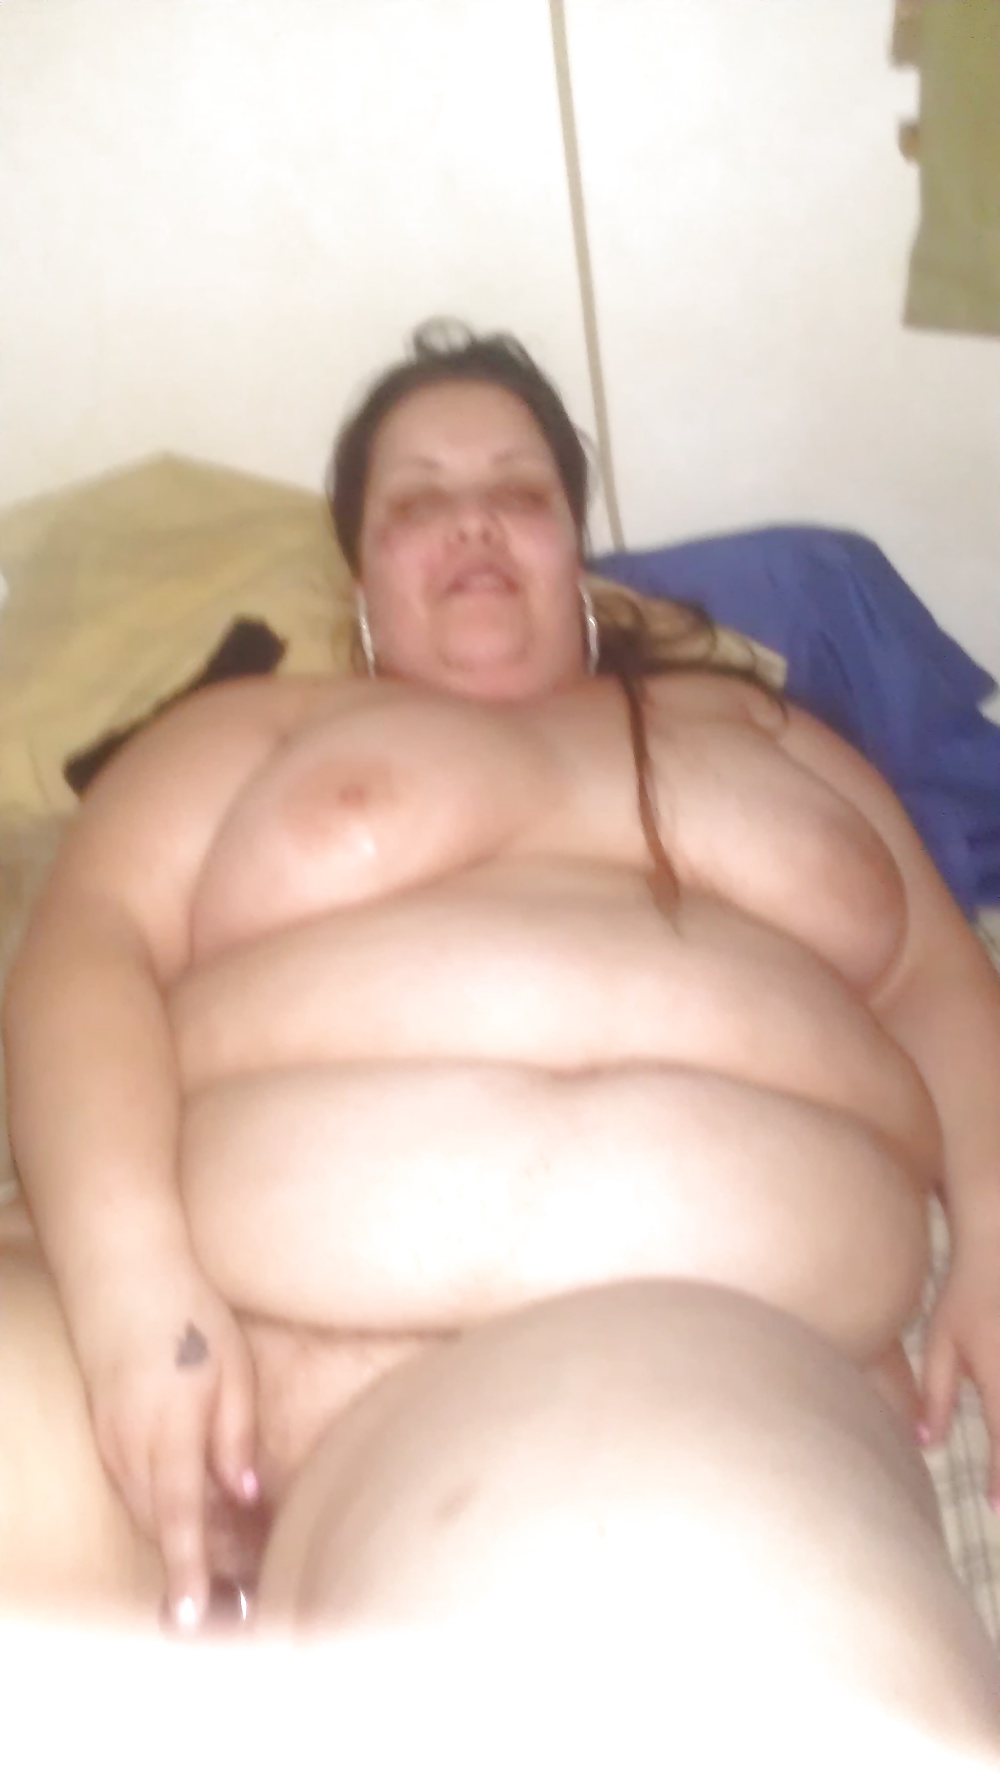 Sex fat pig slut image